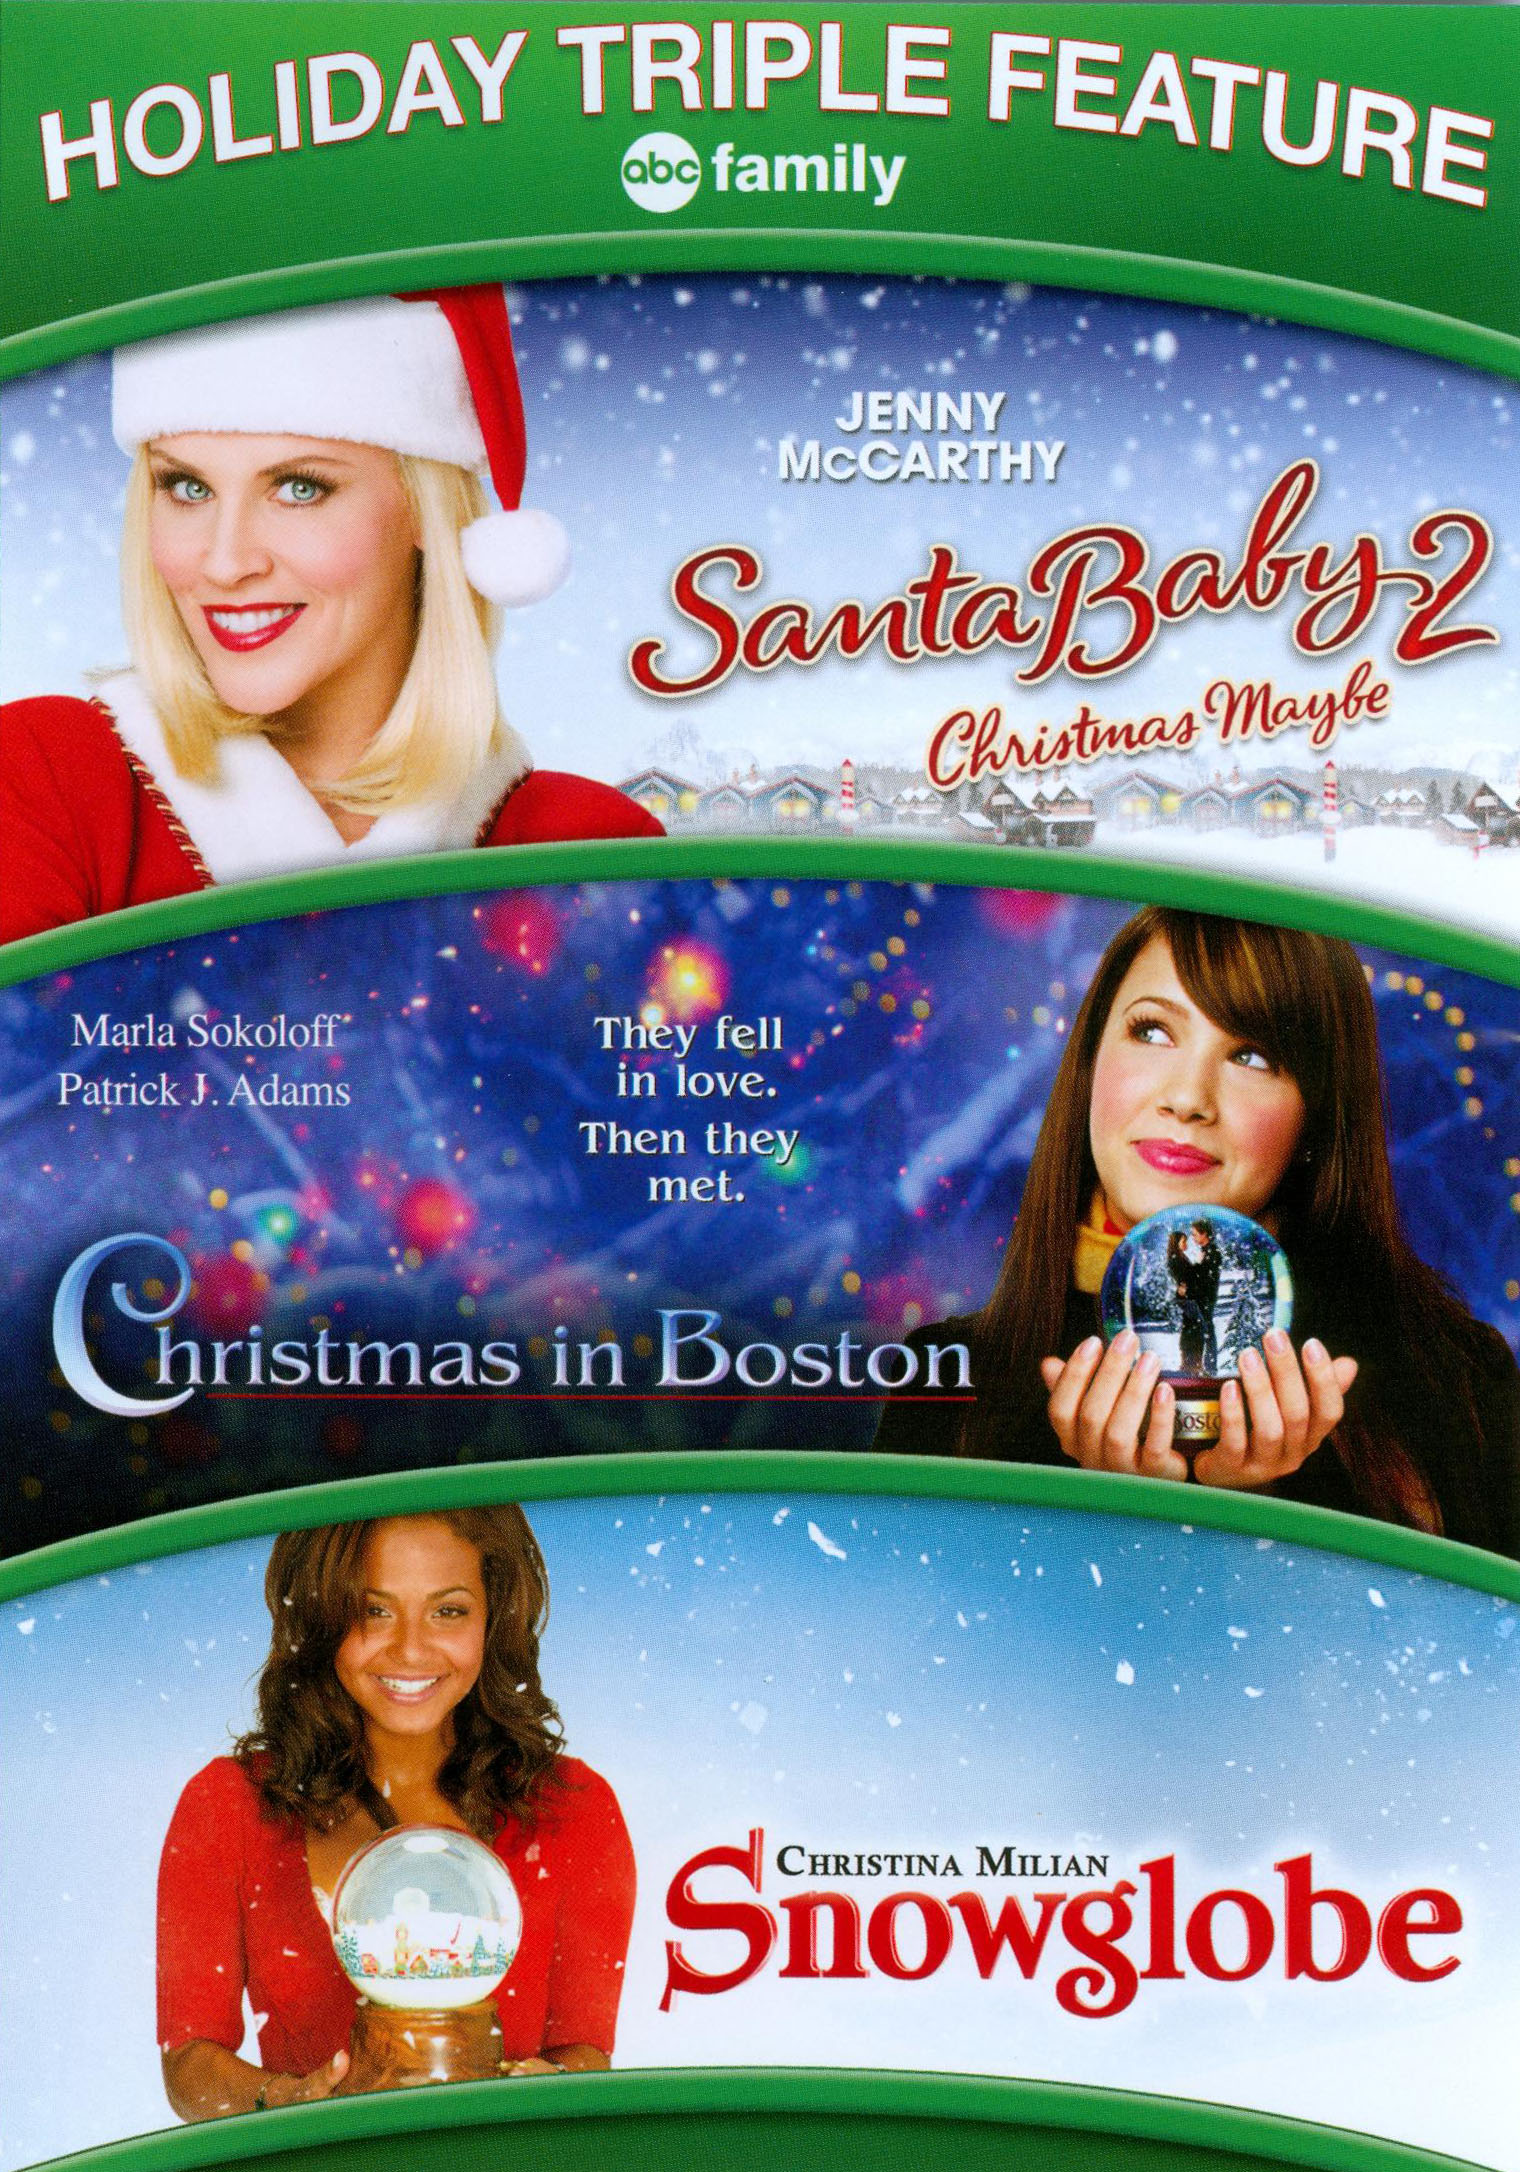 Best Buy Santa Baby 2 Christmas Maybe/Christmas in Boston/Snowglobe